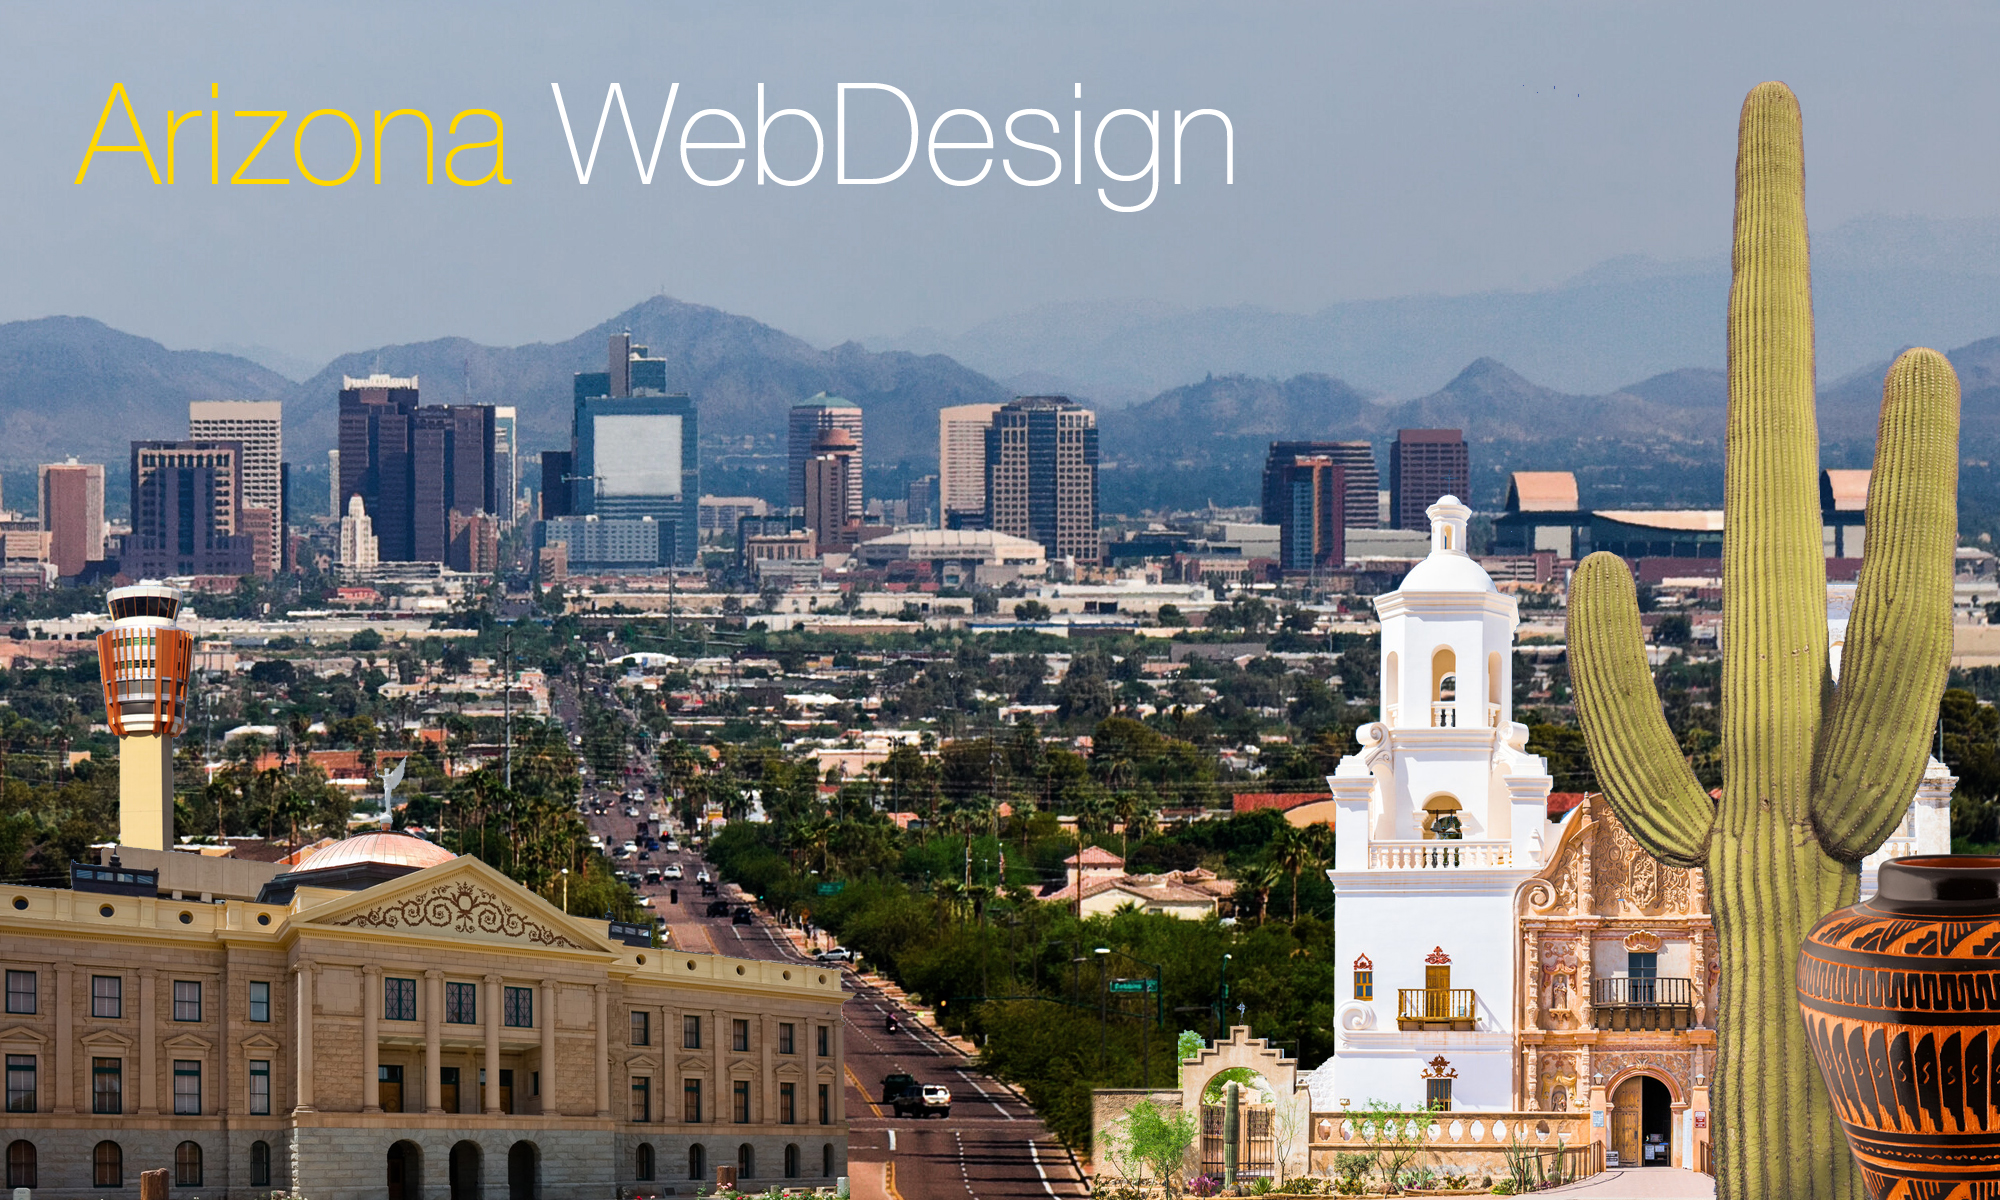 arizona web design